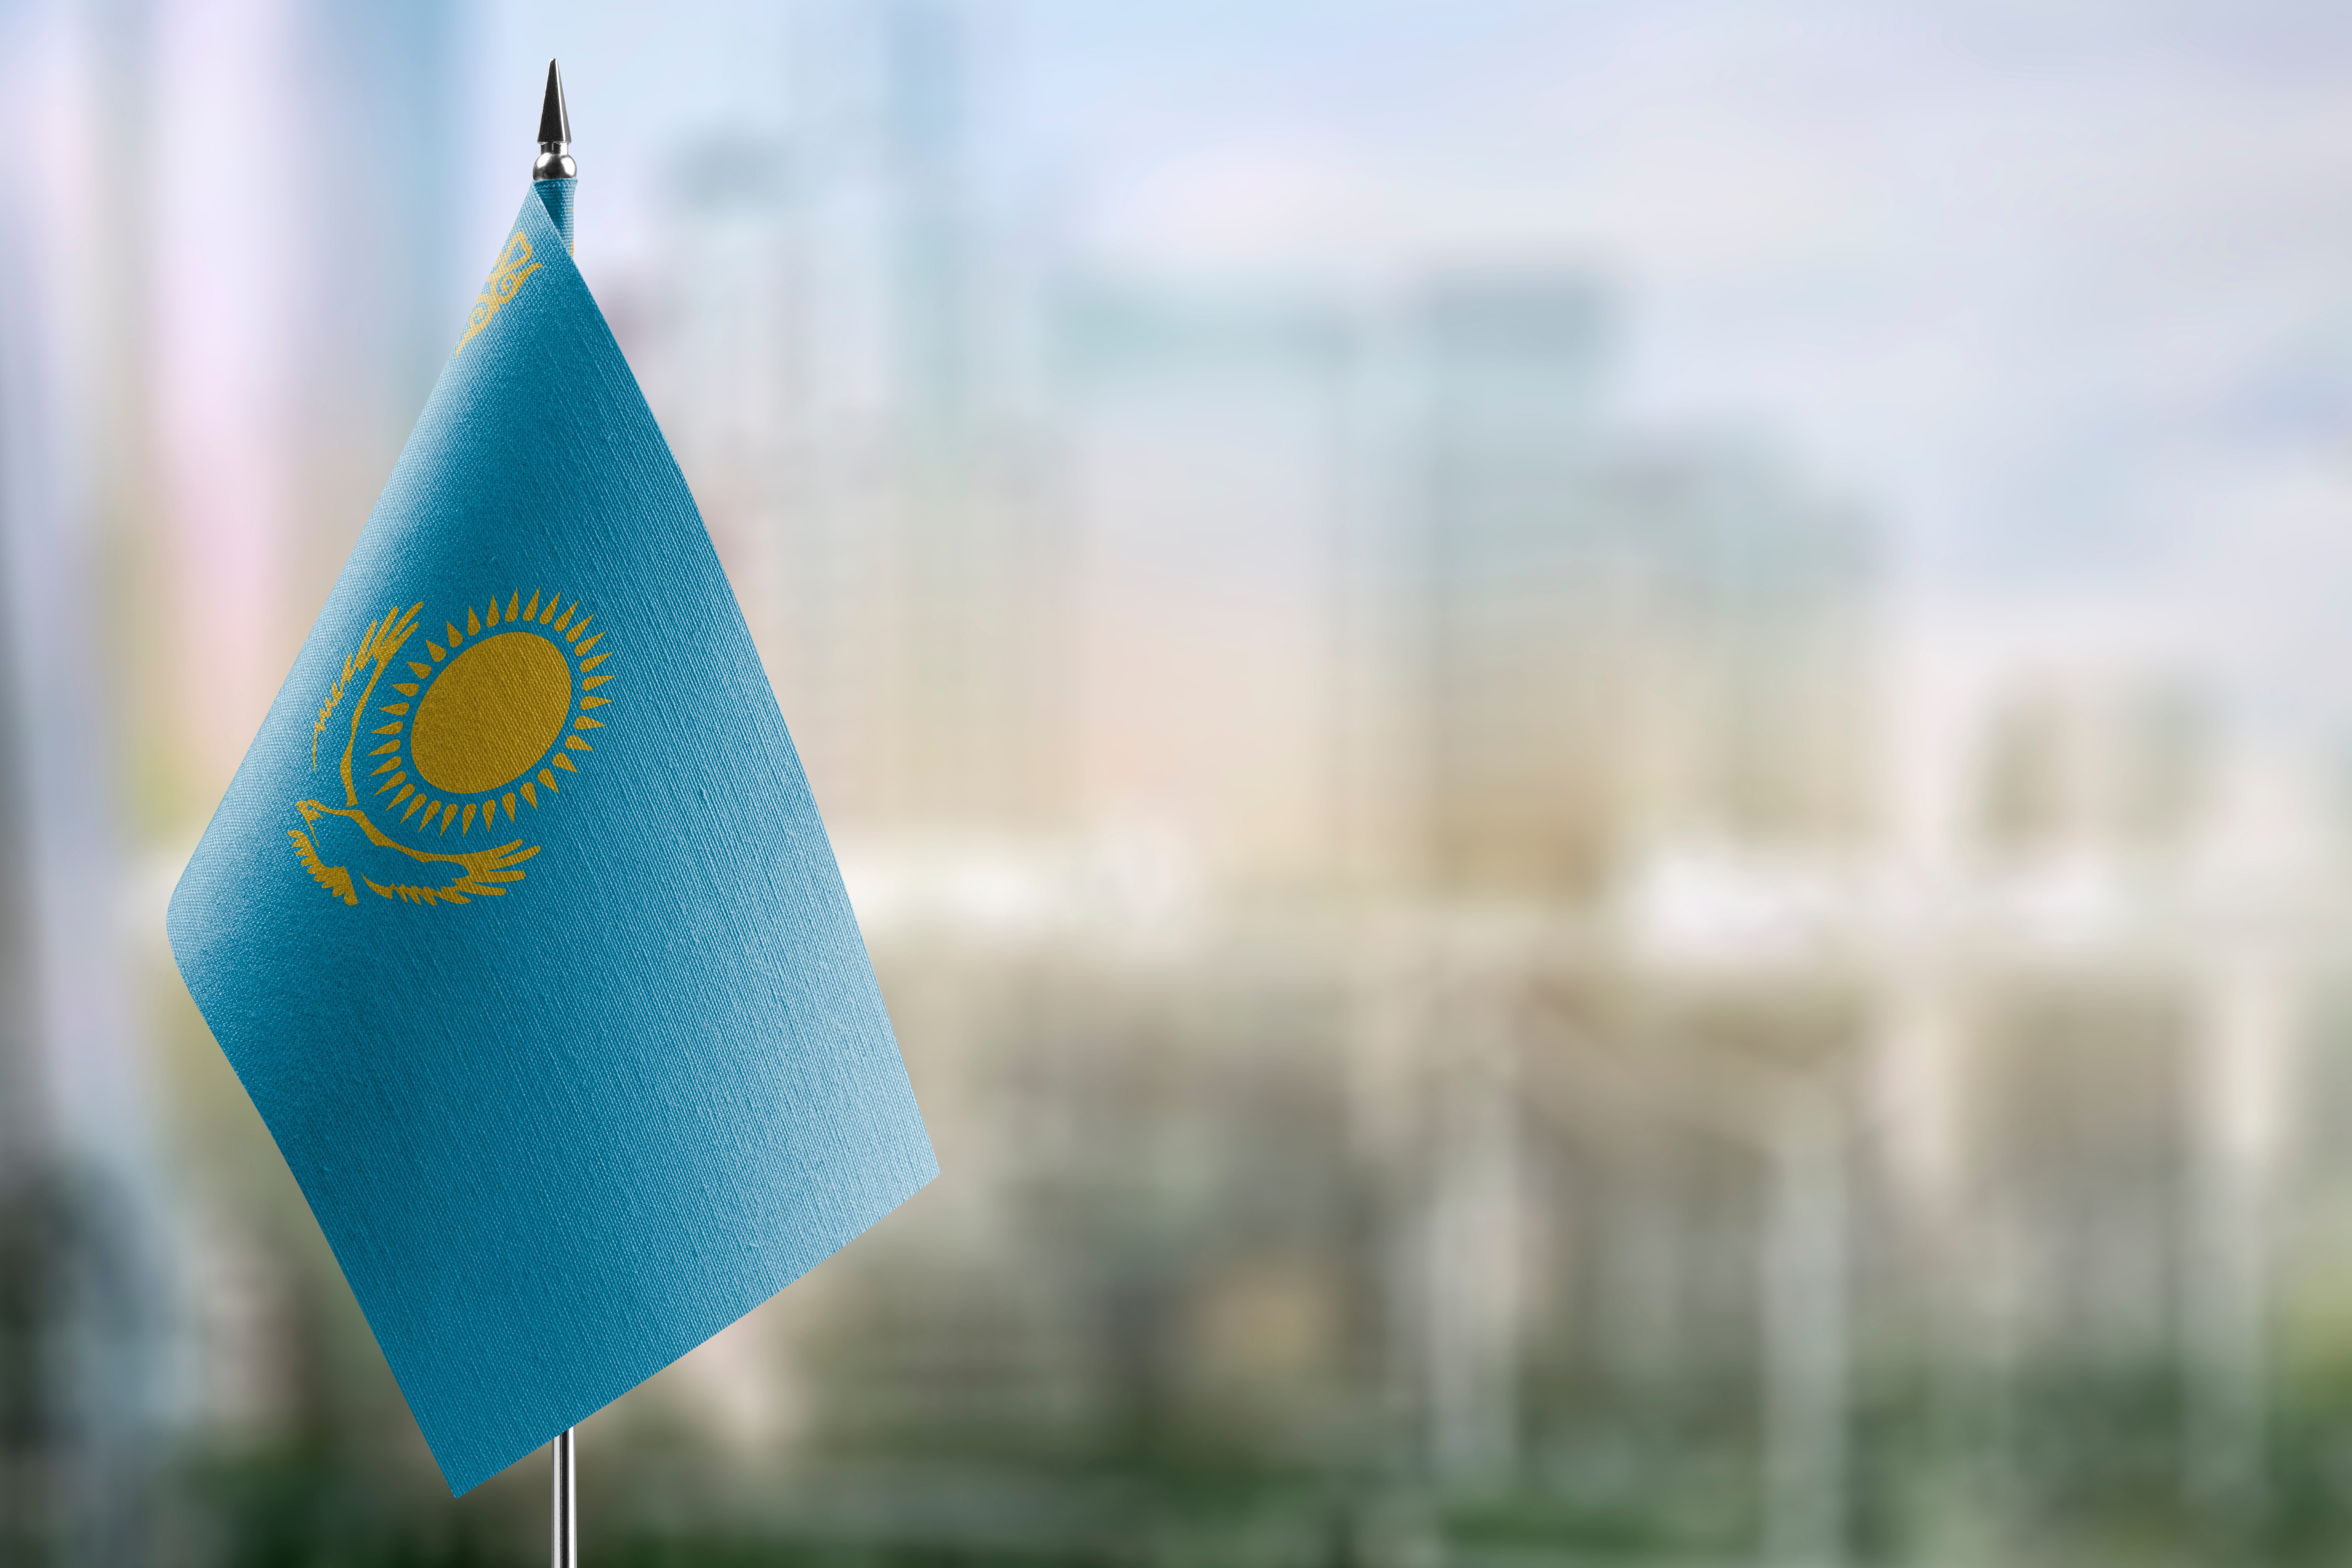 The flag symbolizes the citizenship of Kazakhstan